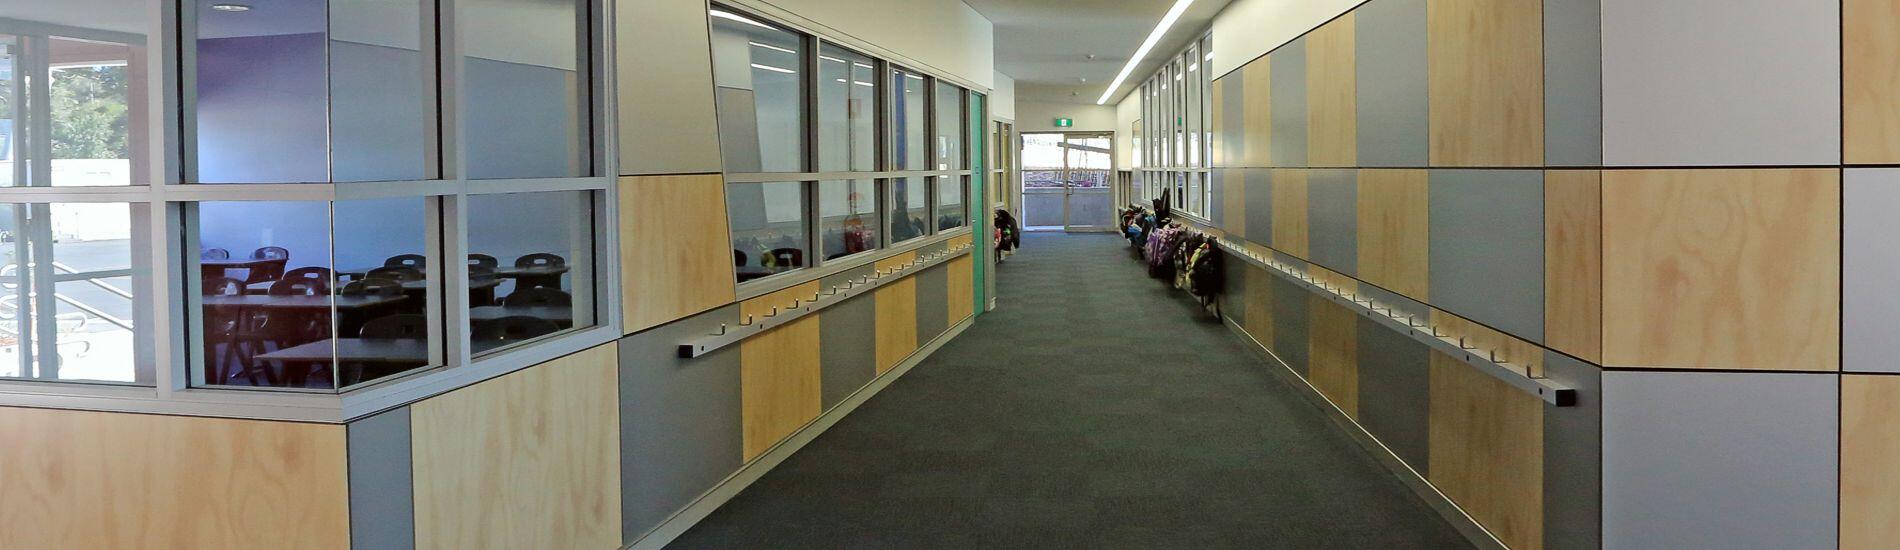 Aesthetic use of SUPALINE decorative BCA compliant panels for school corridors